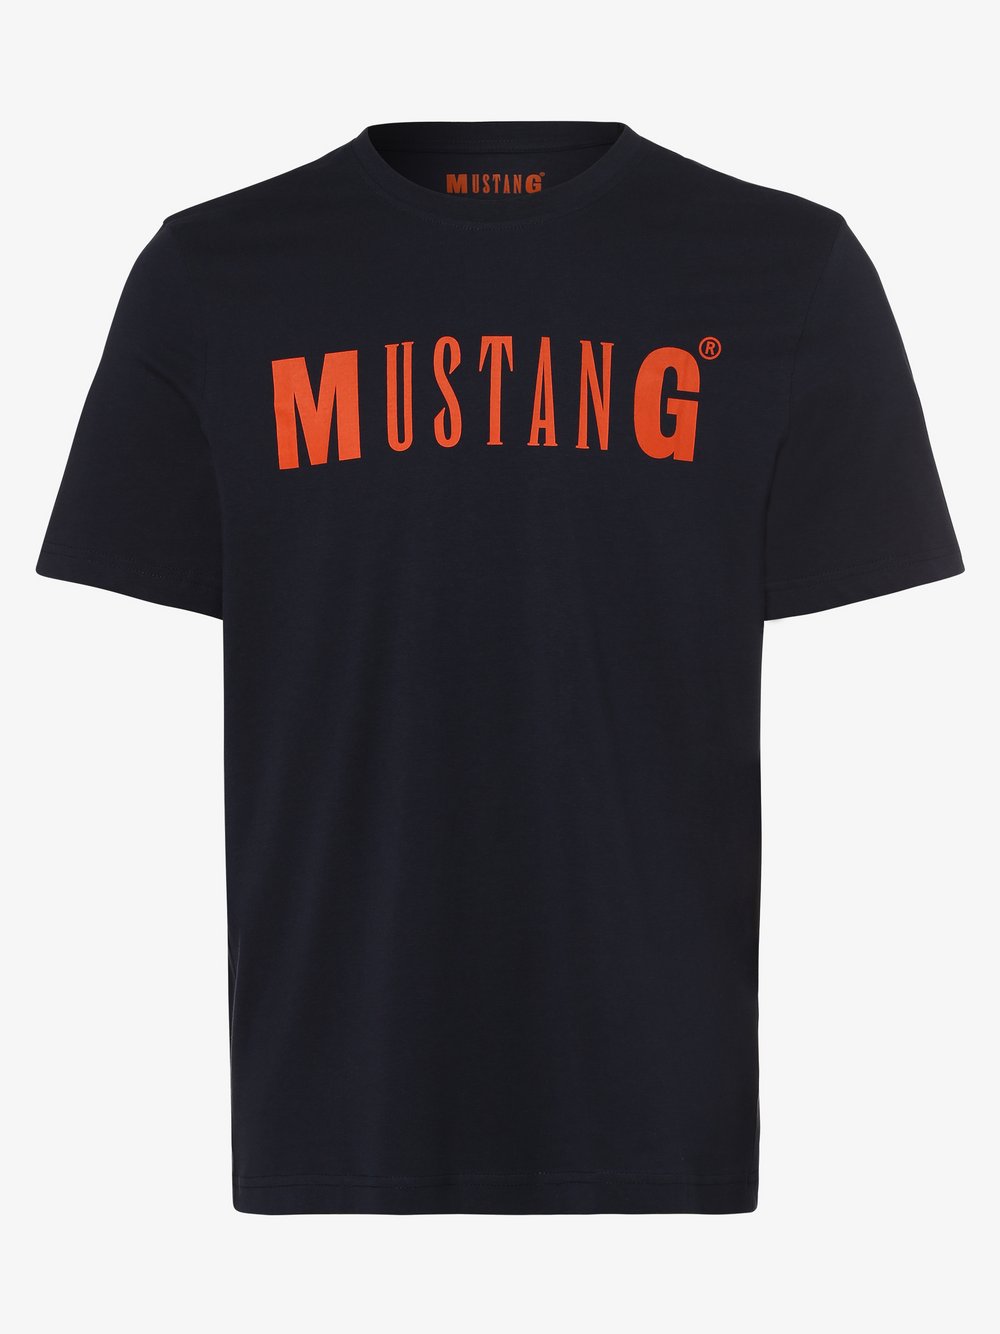 Mustang - T-shirt męski – Alex C, niebieski